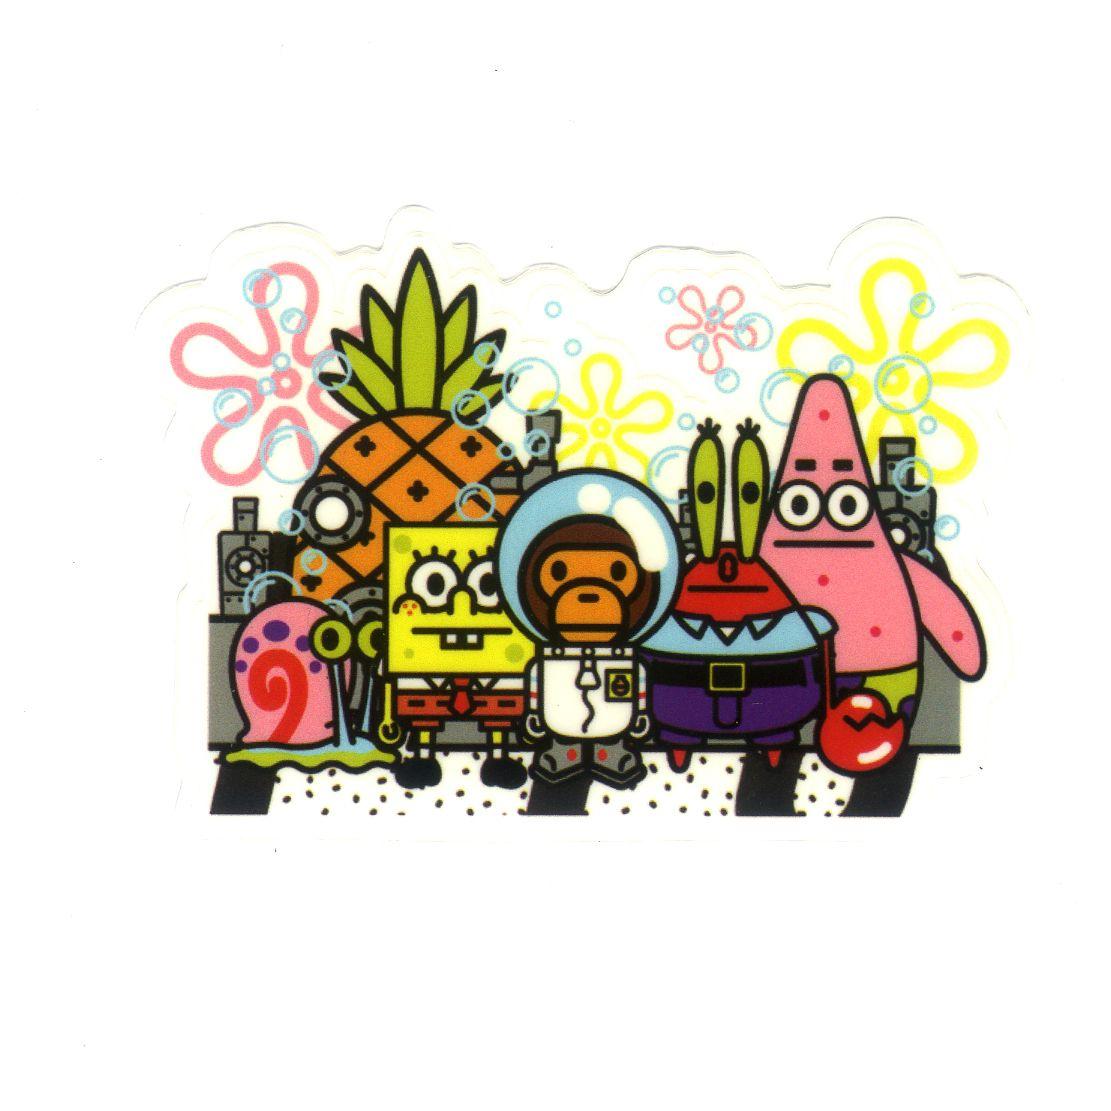 Baby Milo x Spongebob and friends, 5.5 x 8 cm, decal